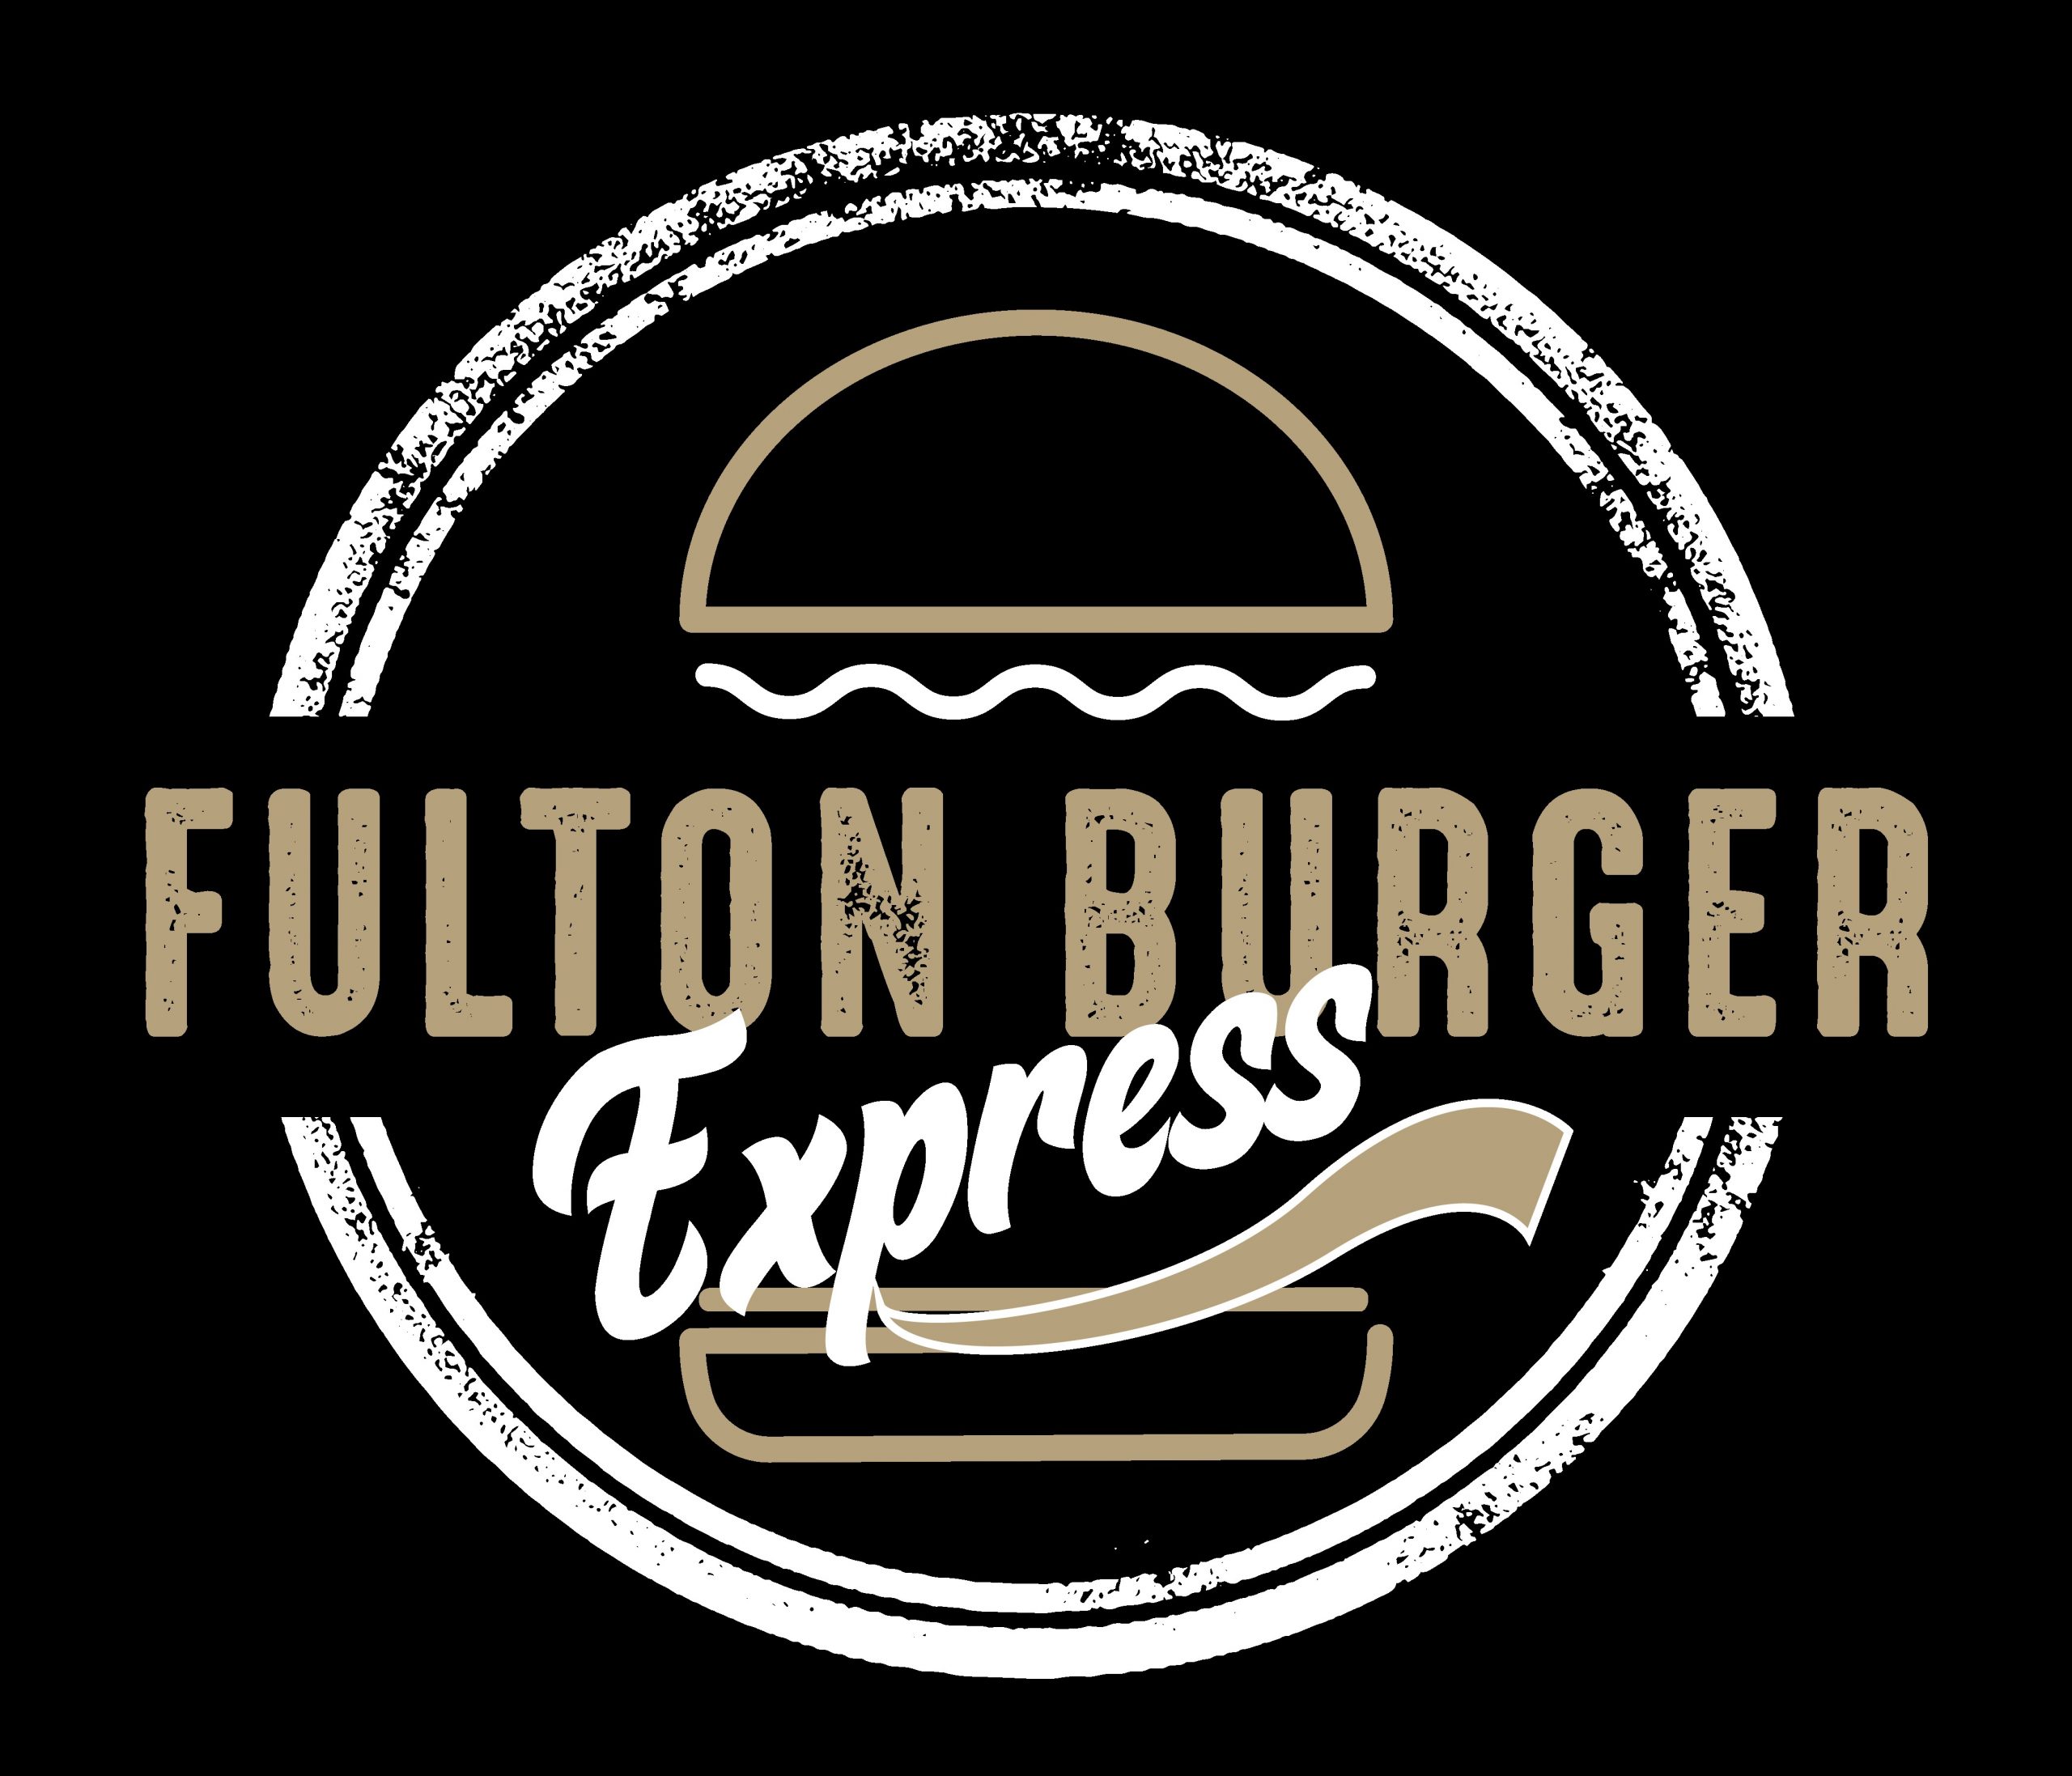 Fulton Burger Express